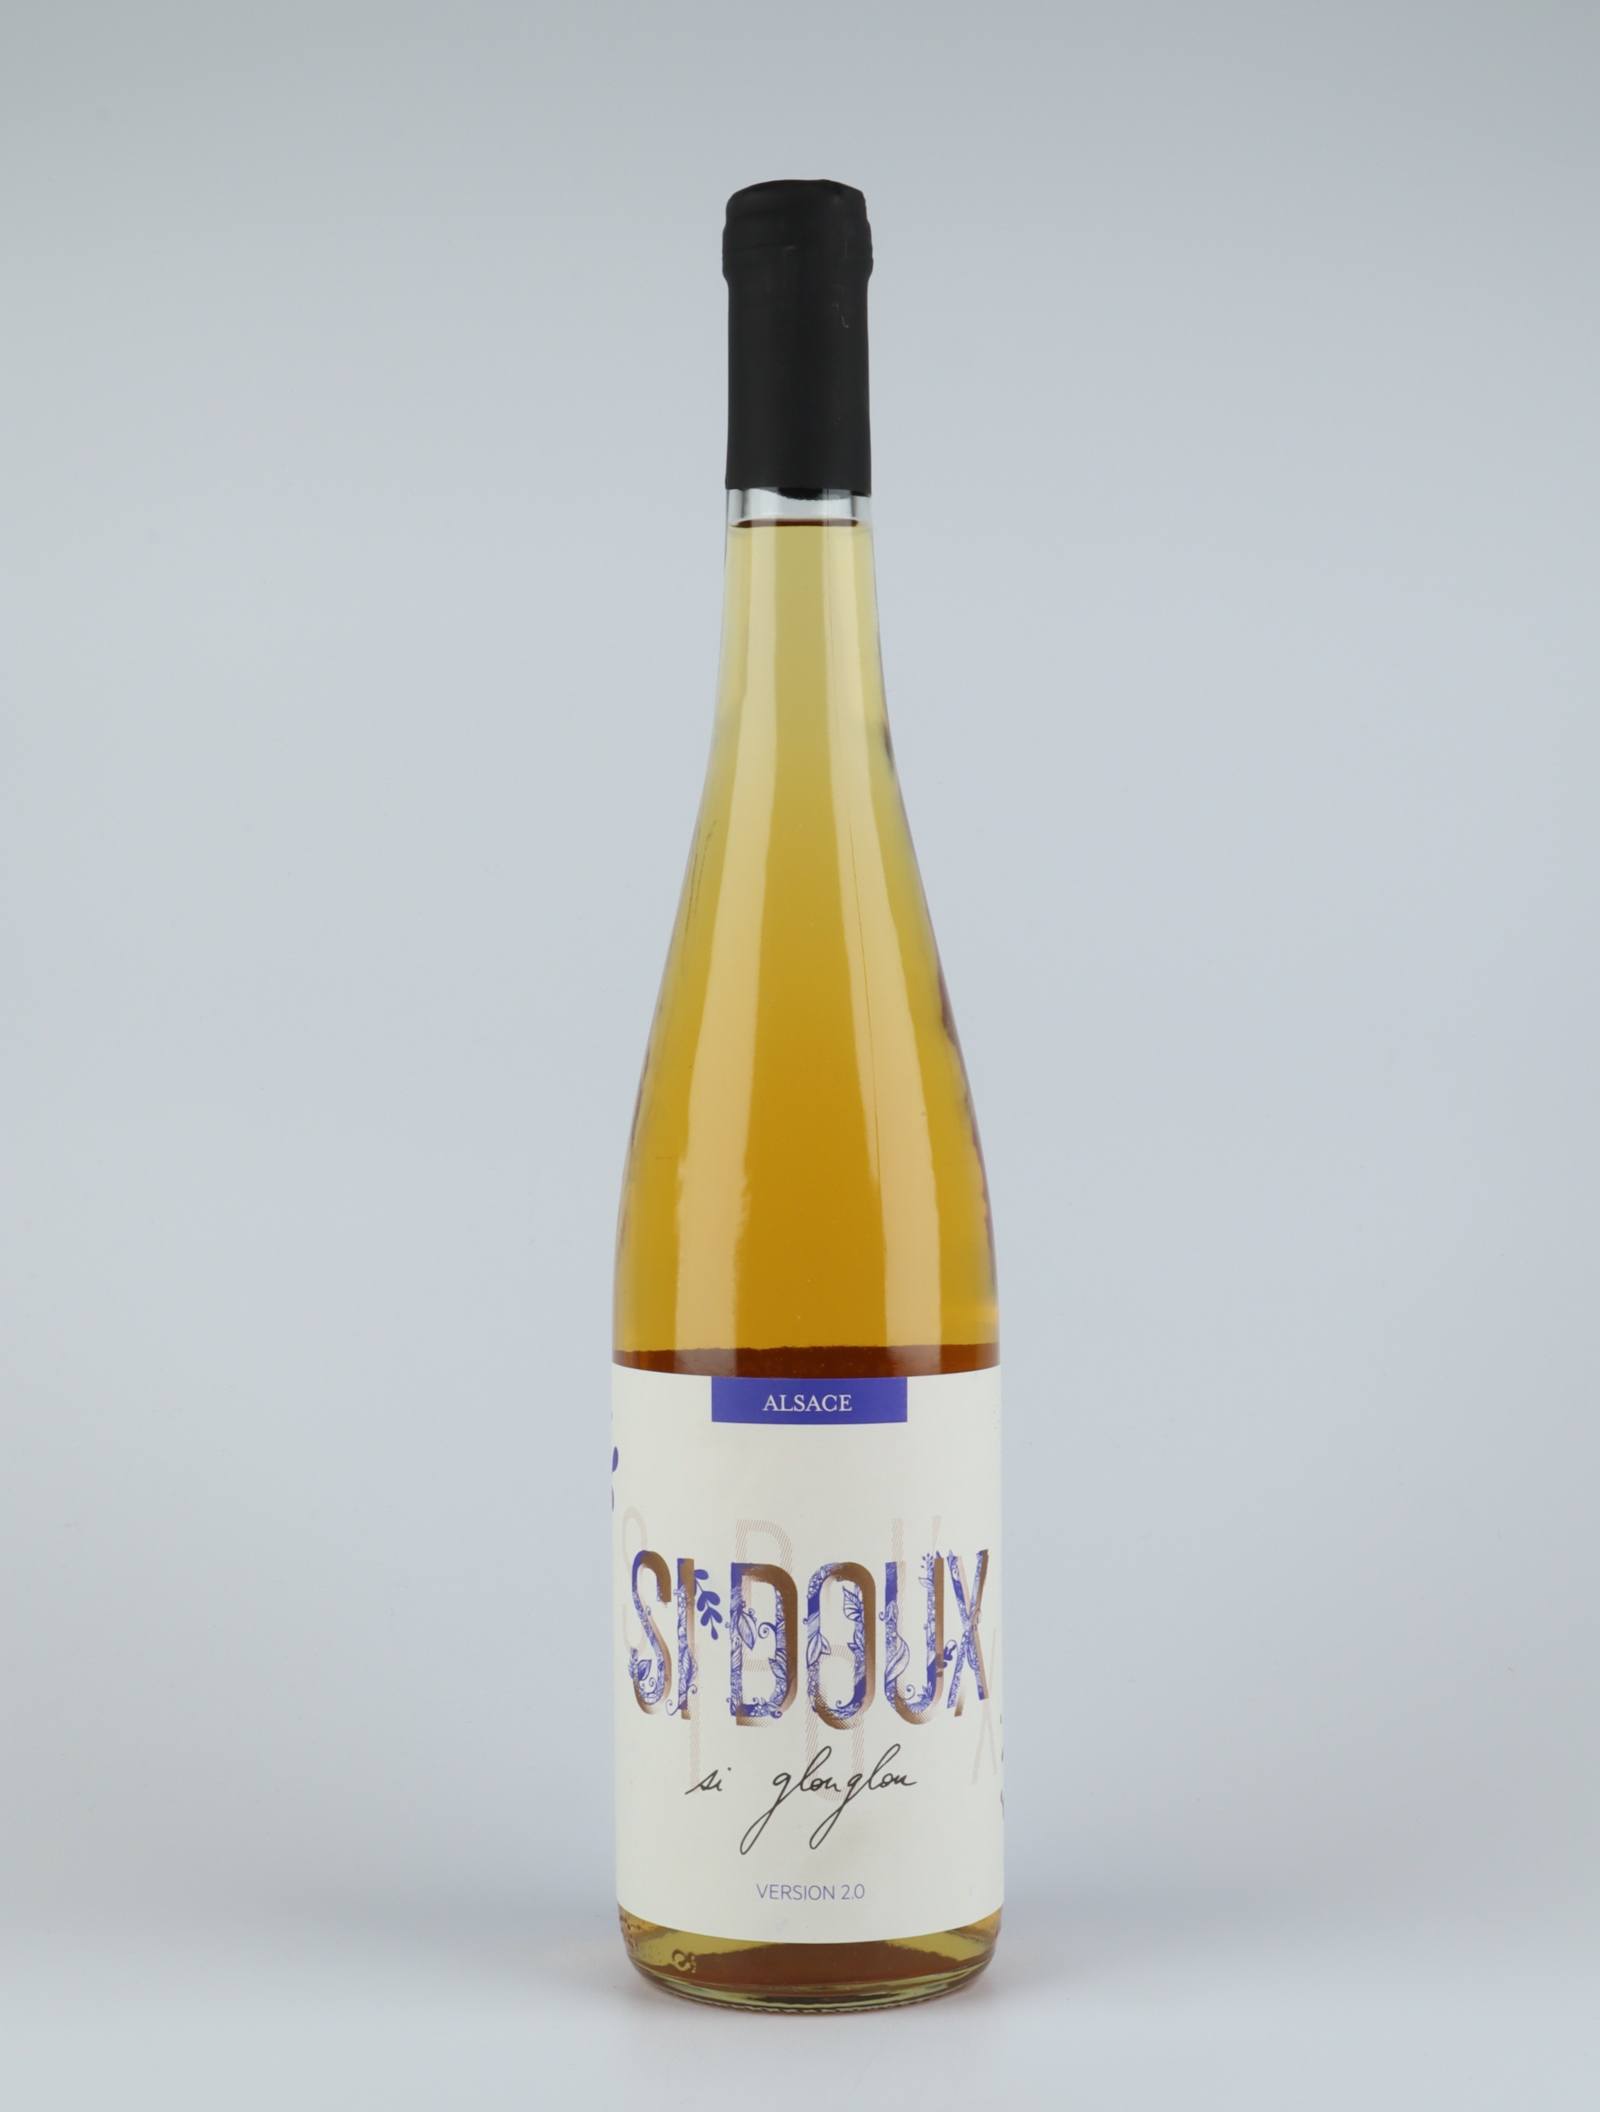 En flaske N.V. Si Doux Sød vin fra Domaine Christian Binner, Alsace i Frankrig